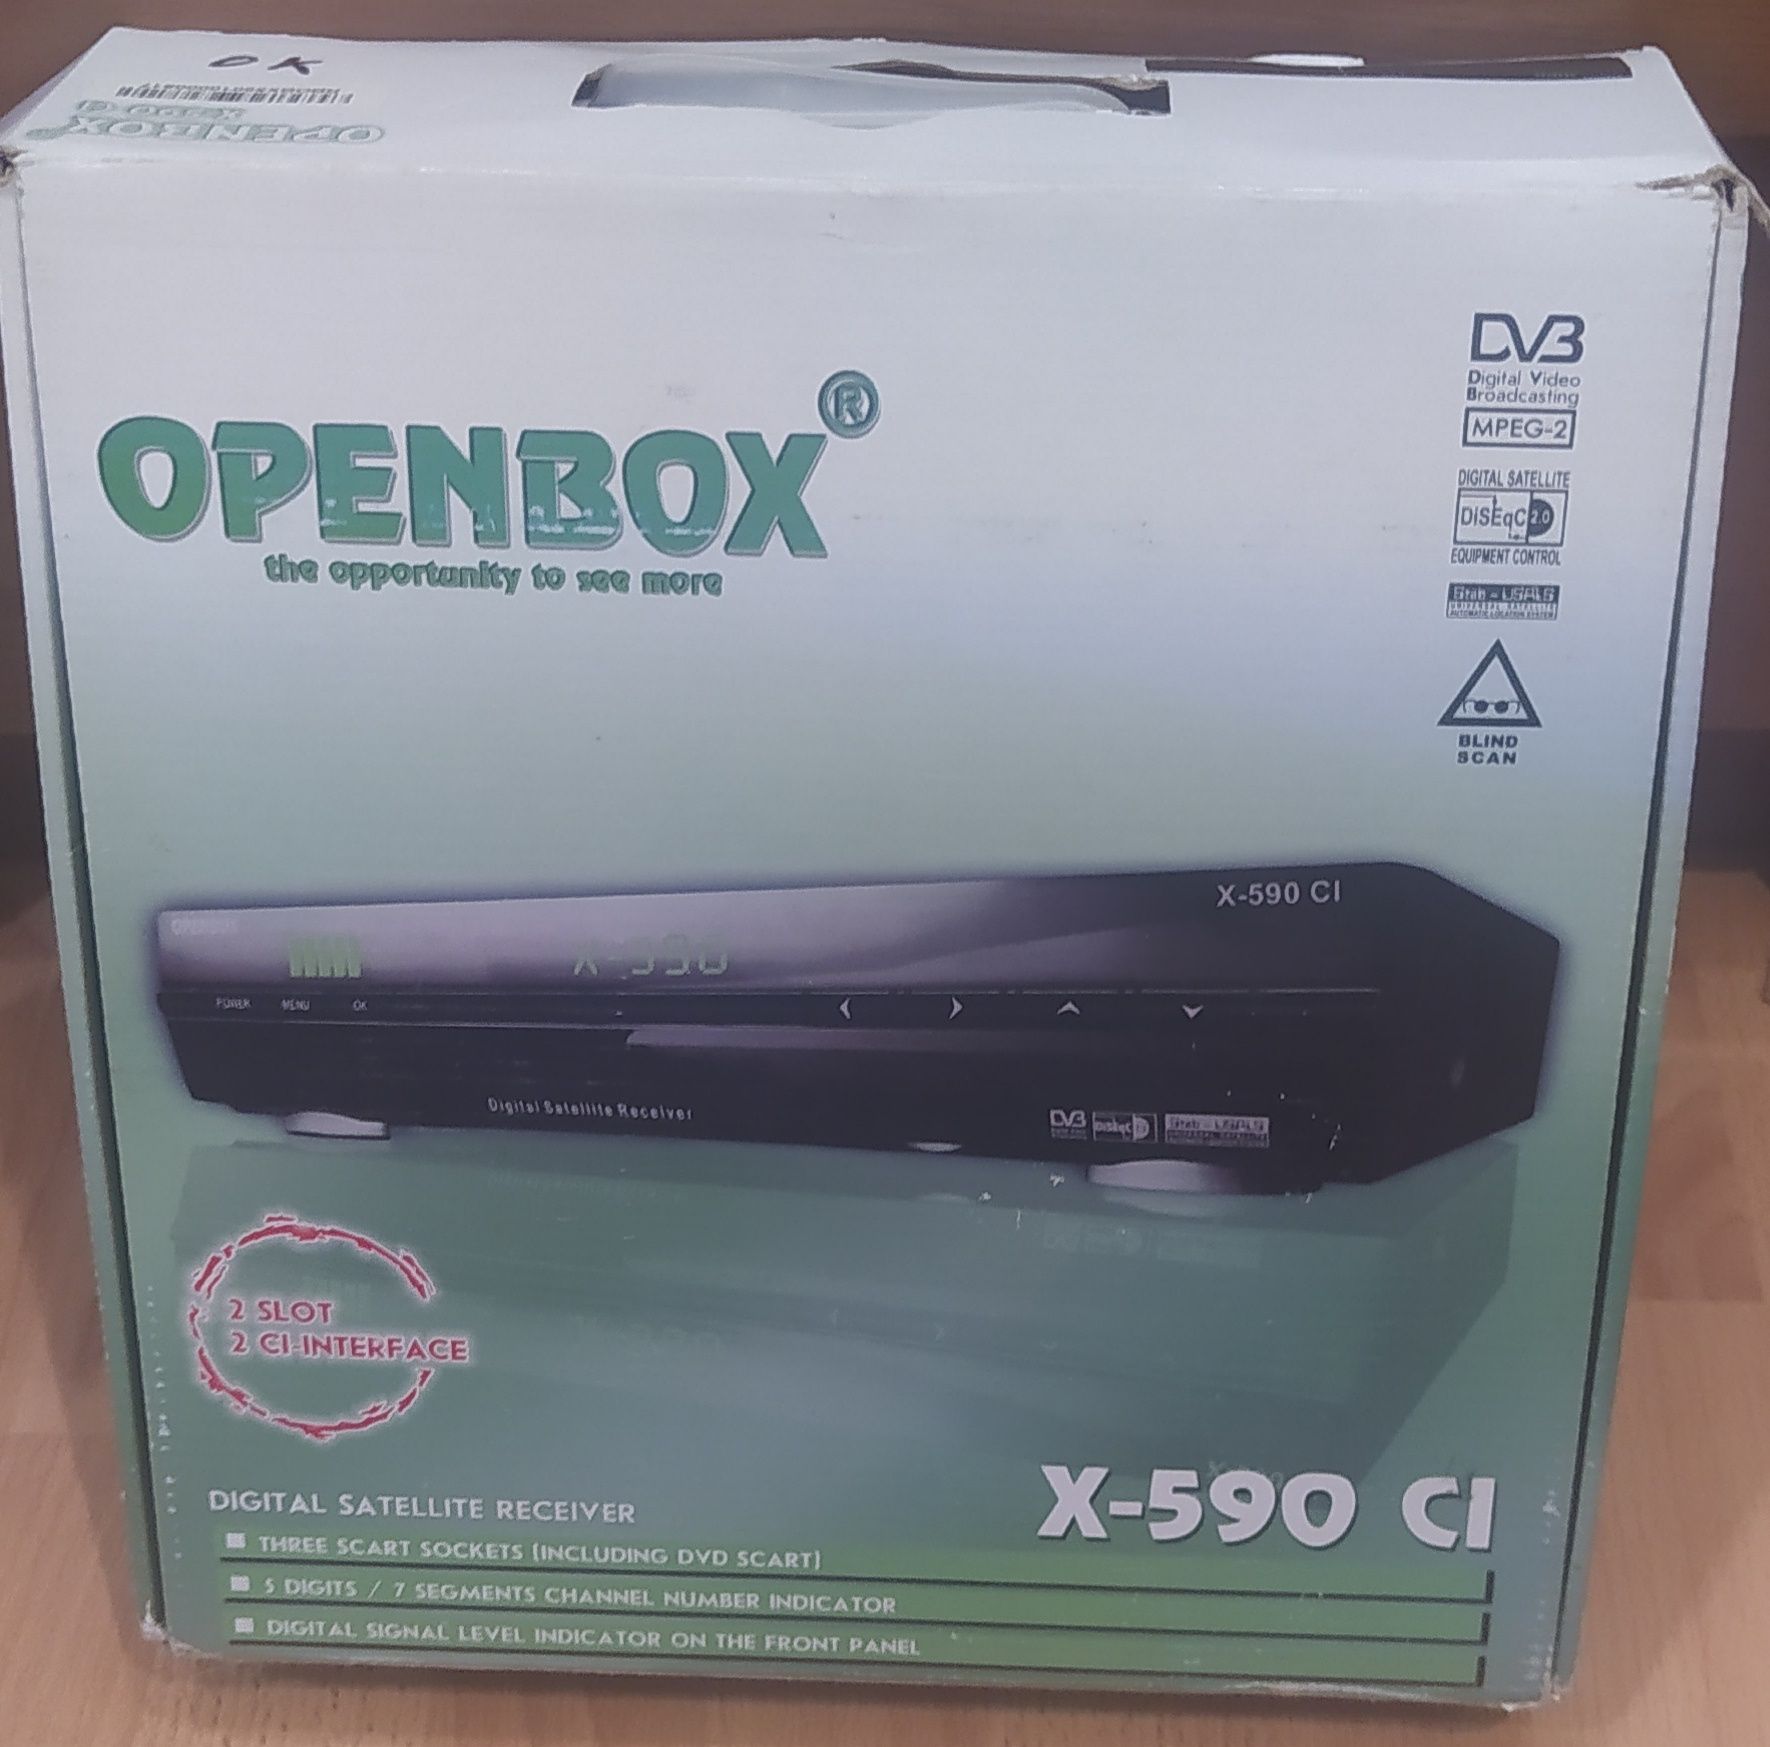 Openbox x-590 ci